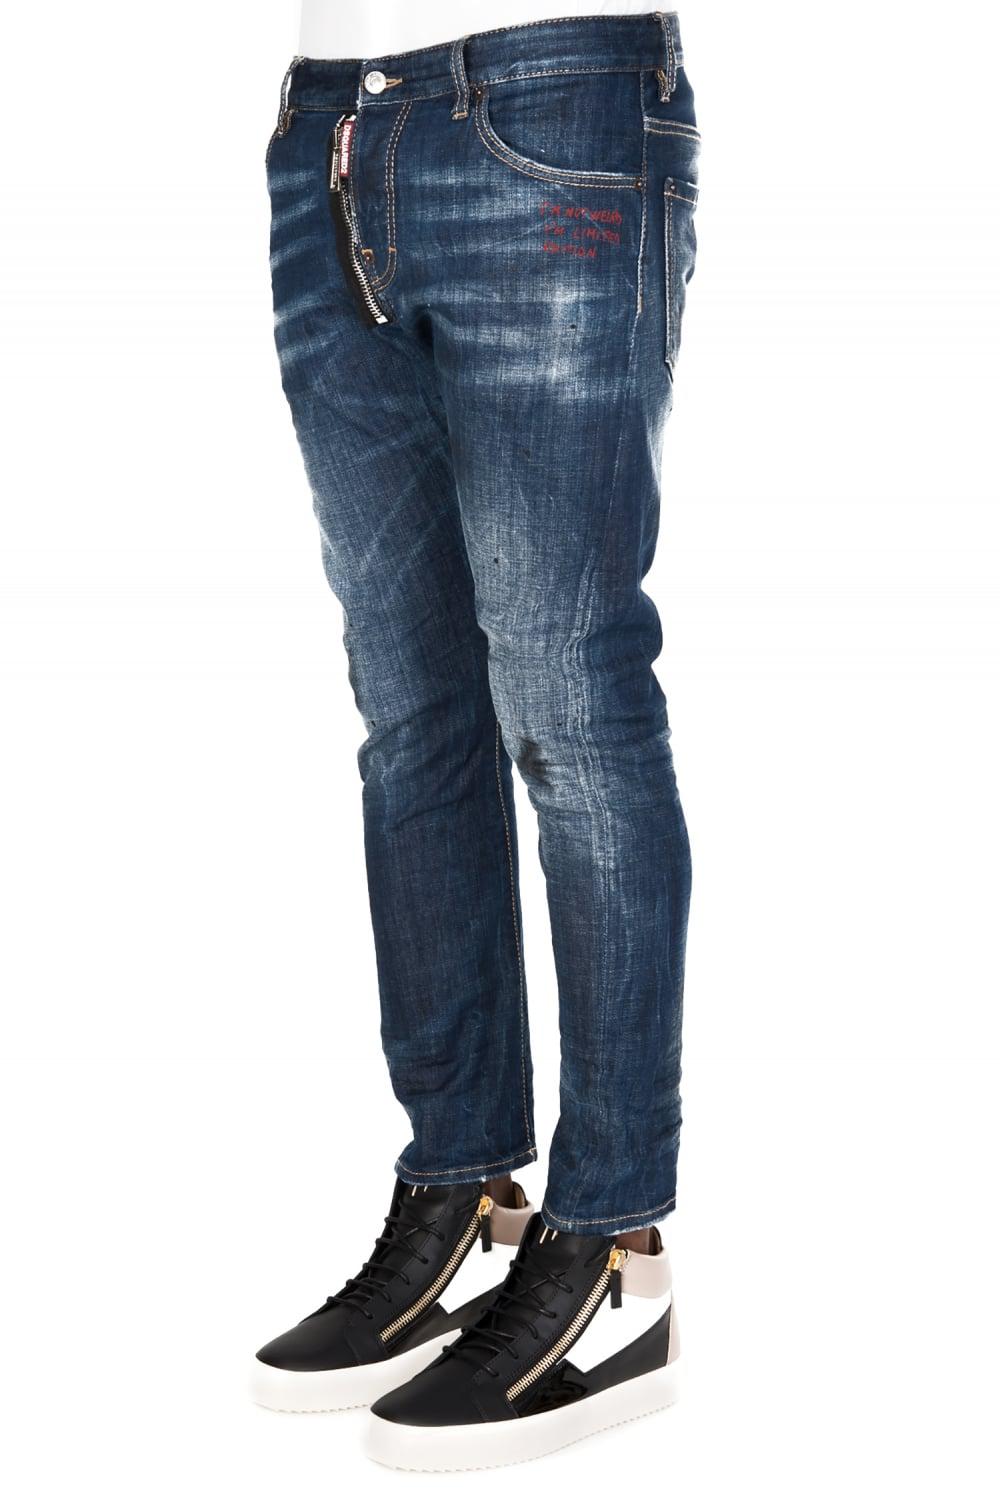 dsquared jeans zipper